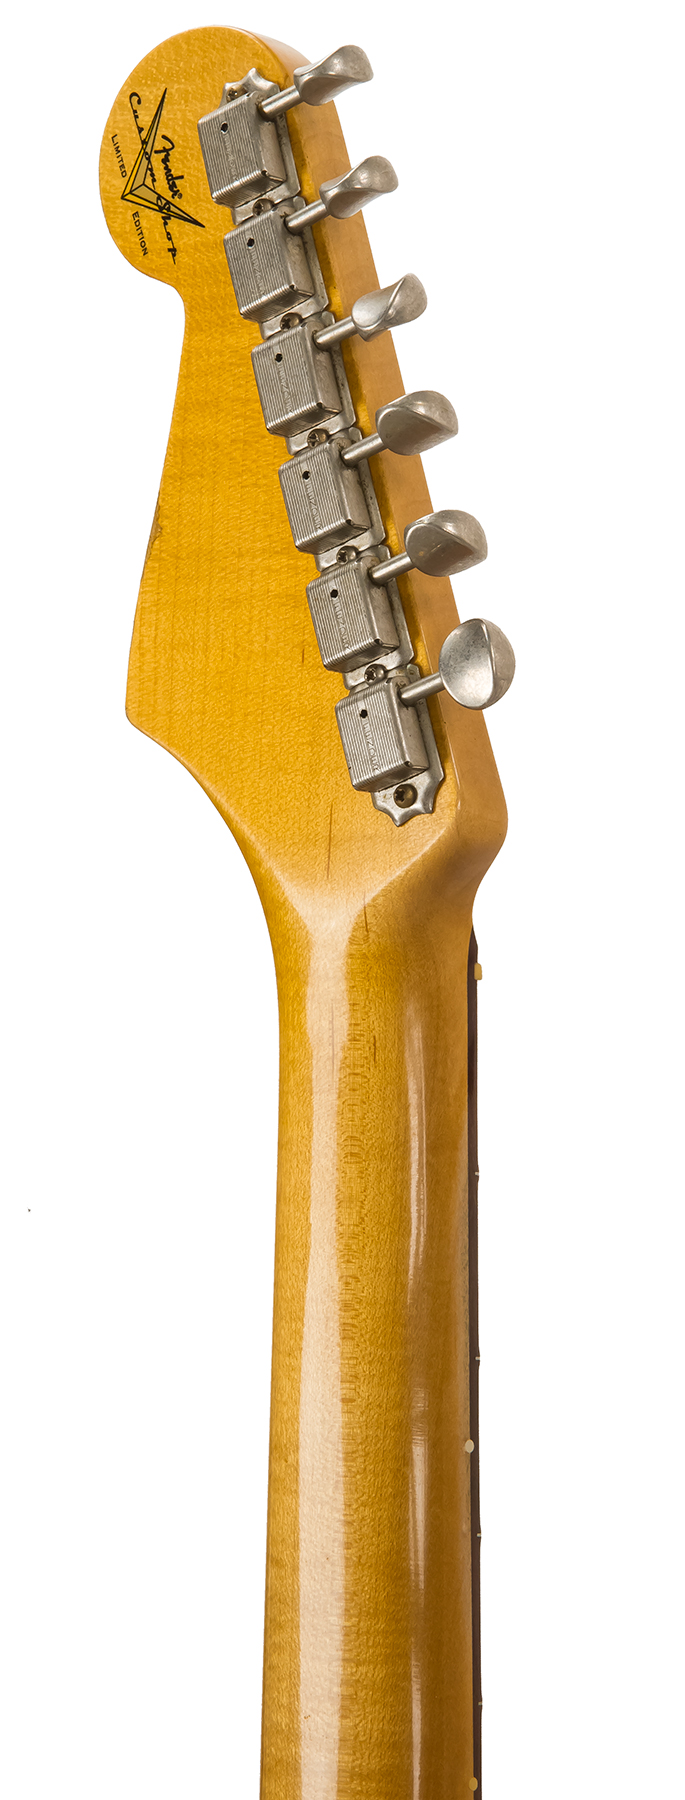 Fender Custom Shop Strat 1960 Rw #cz544406 - Relic Aztec Gold - E-Gitarre in Str-Form - Variation 6